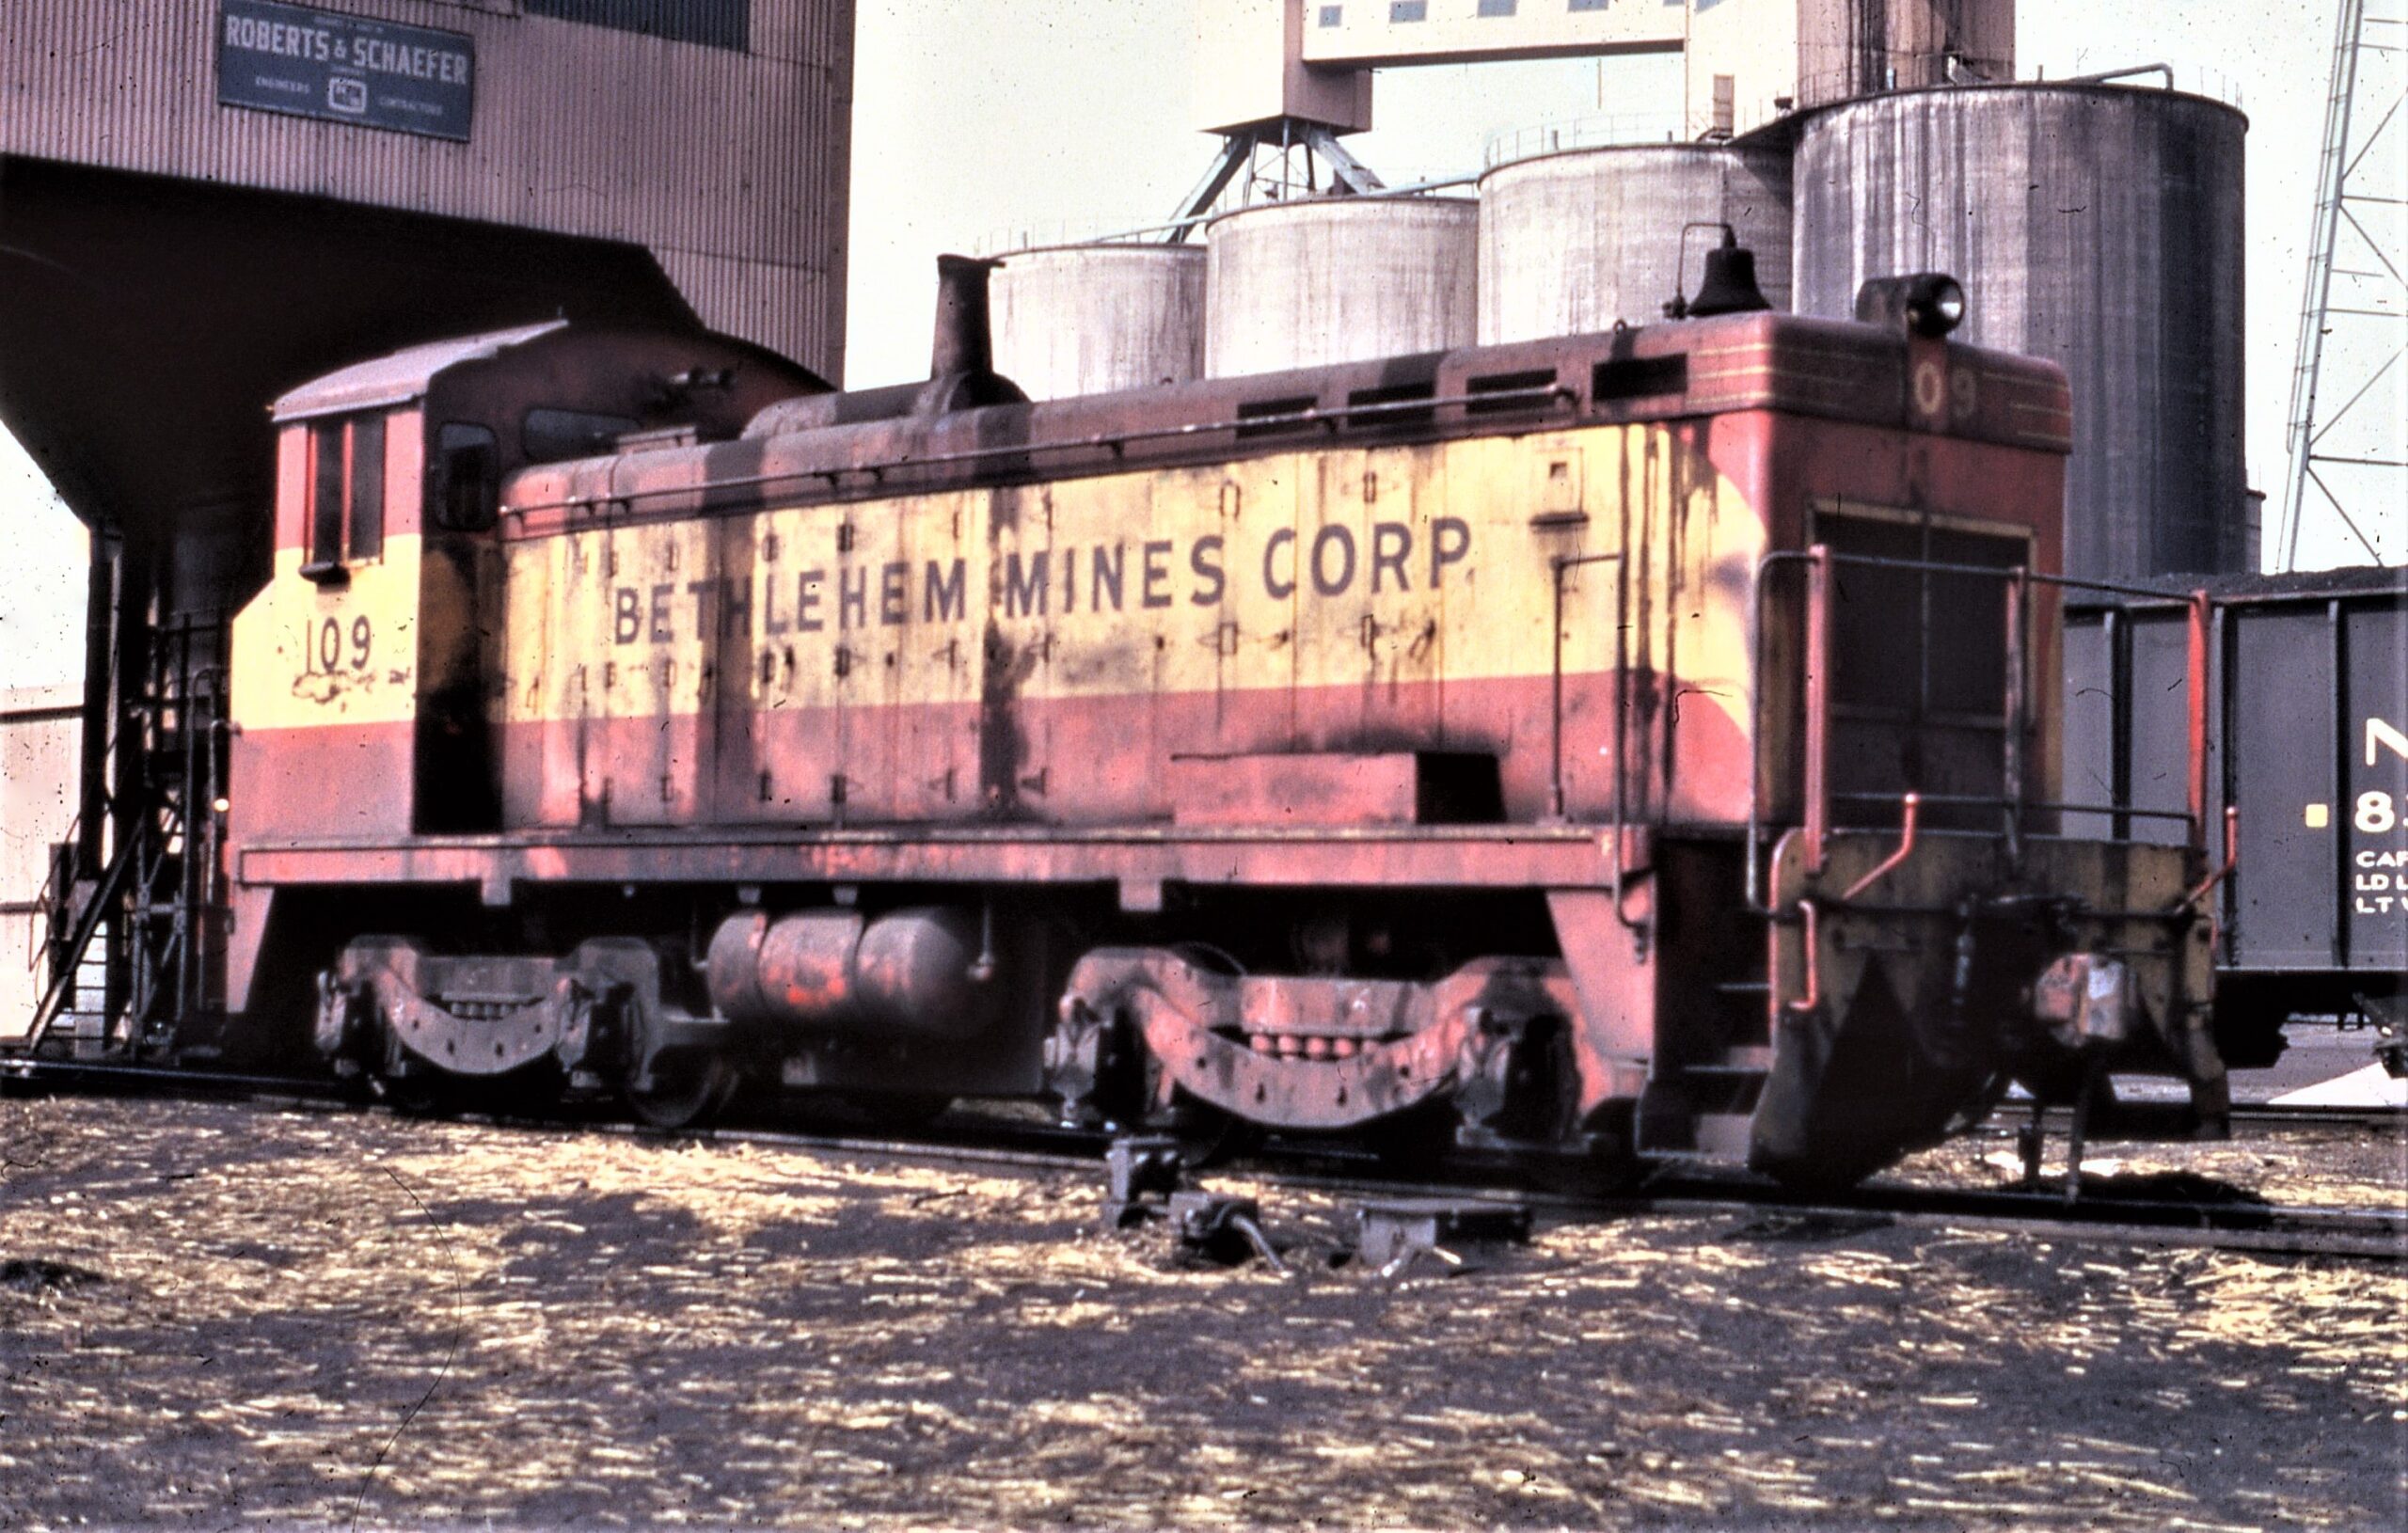 Bethlehem Mines | Ebensburg, Pennsylvania | EMC diesel-electric SC #109 | ex DL&W #426 | August 7, 1966 Steve Timko Collection